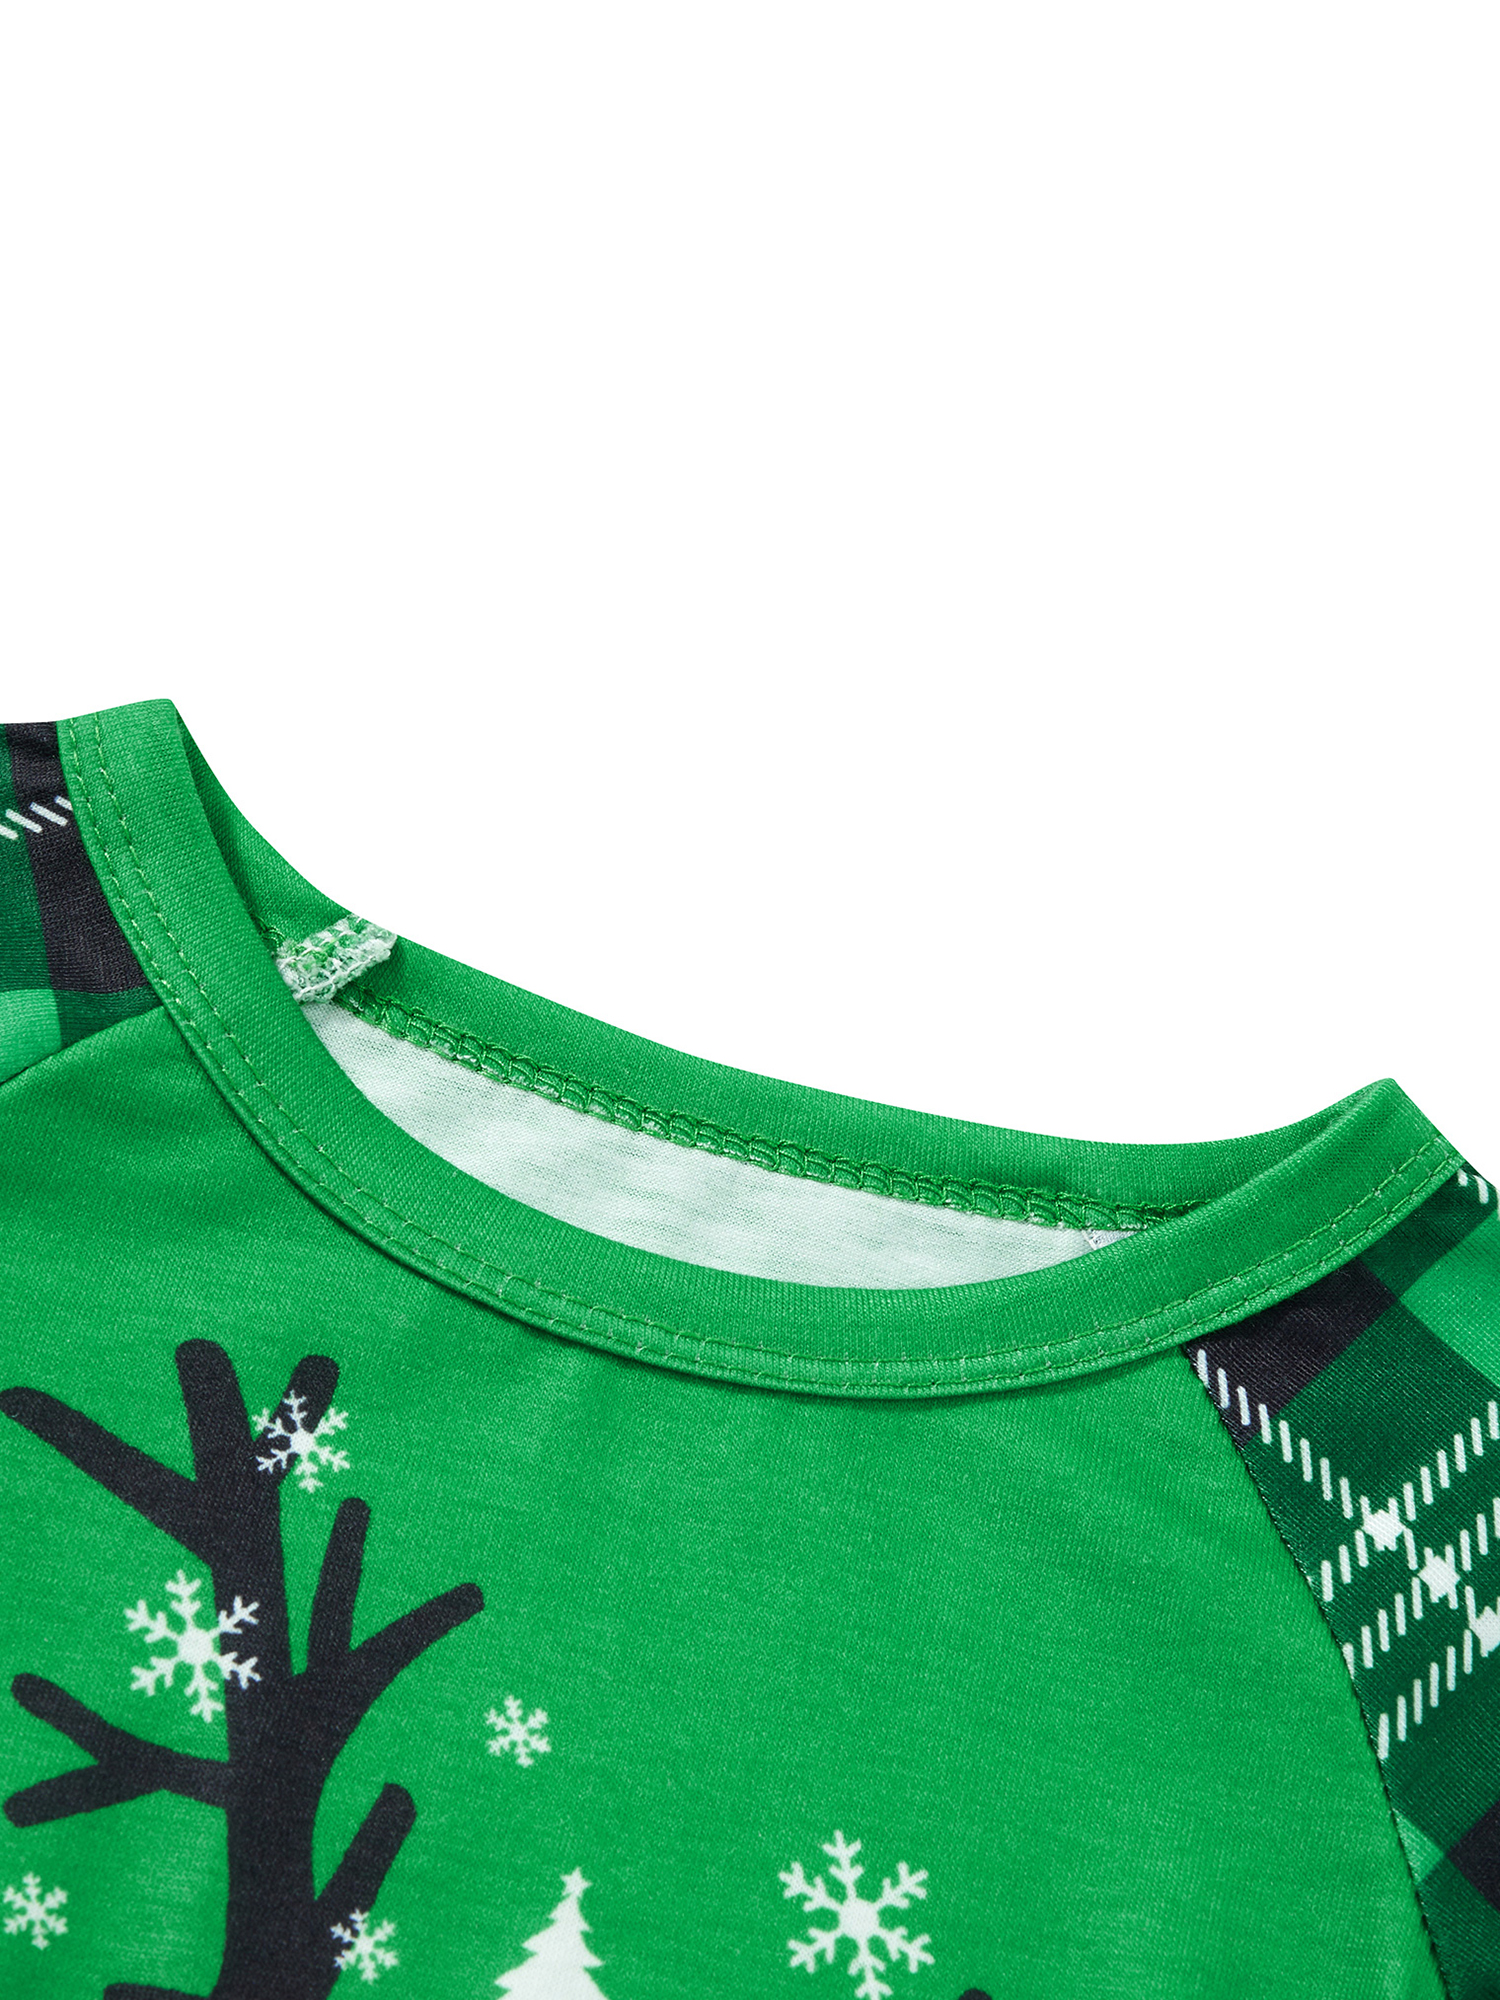 Christmas Family Pajamas Matching Sets Xmas Matching Pjs, Long Sleeve Deer Tops + Plaid Pants Set for Adults, Kid, Baby, Dog - image 4 of 6